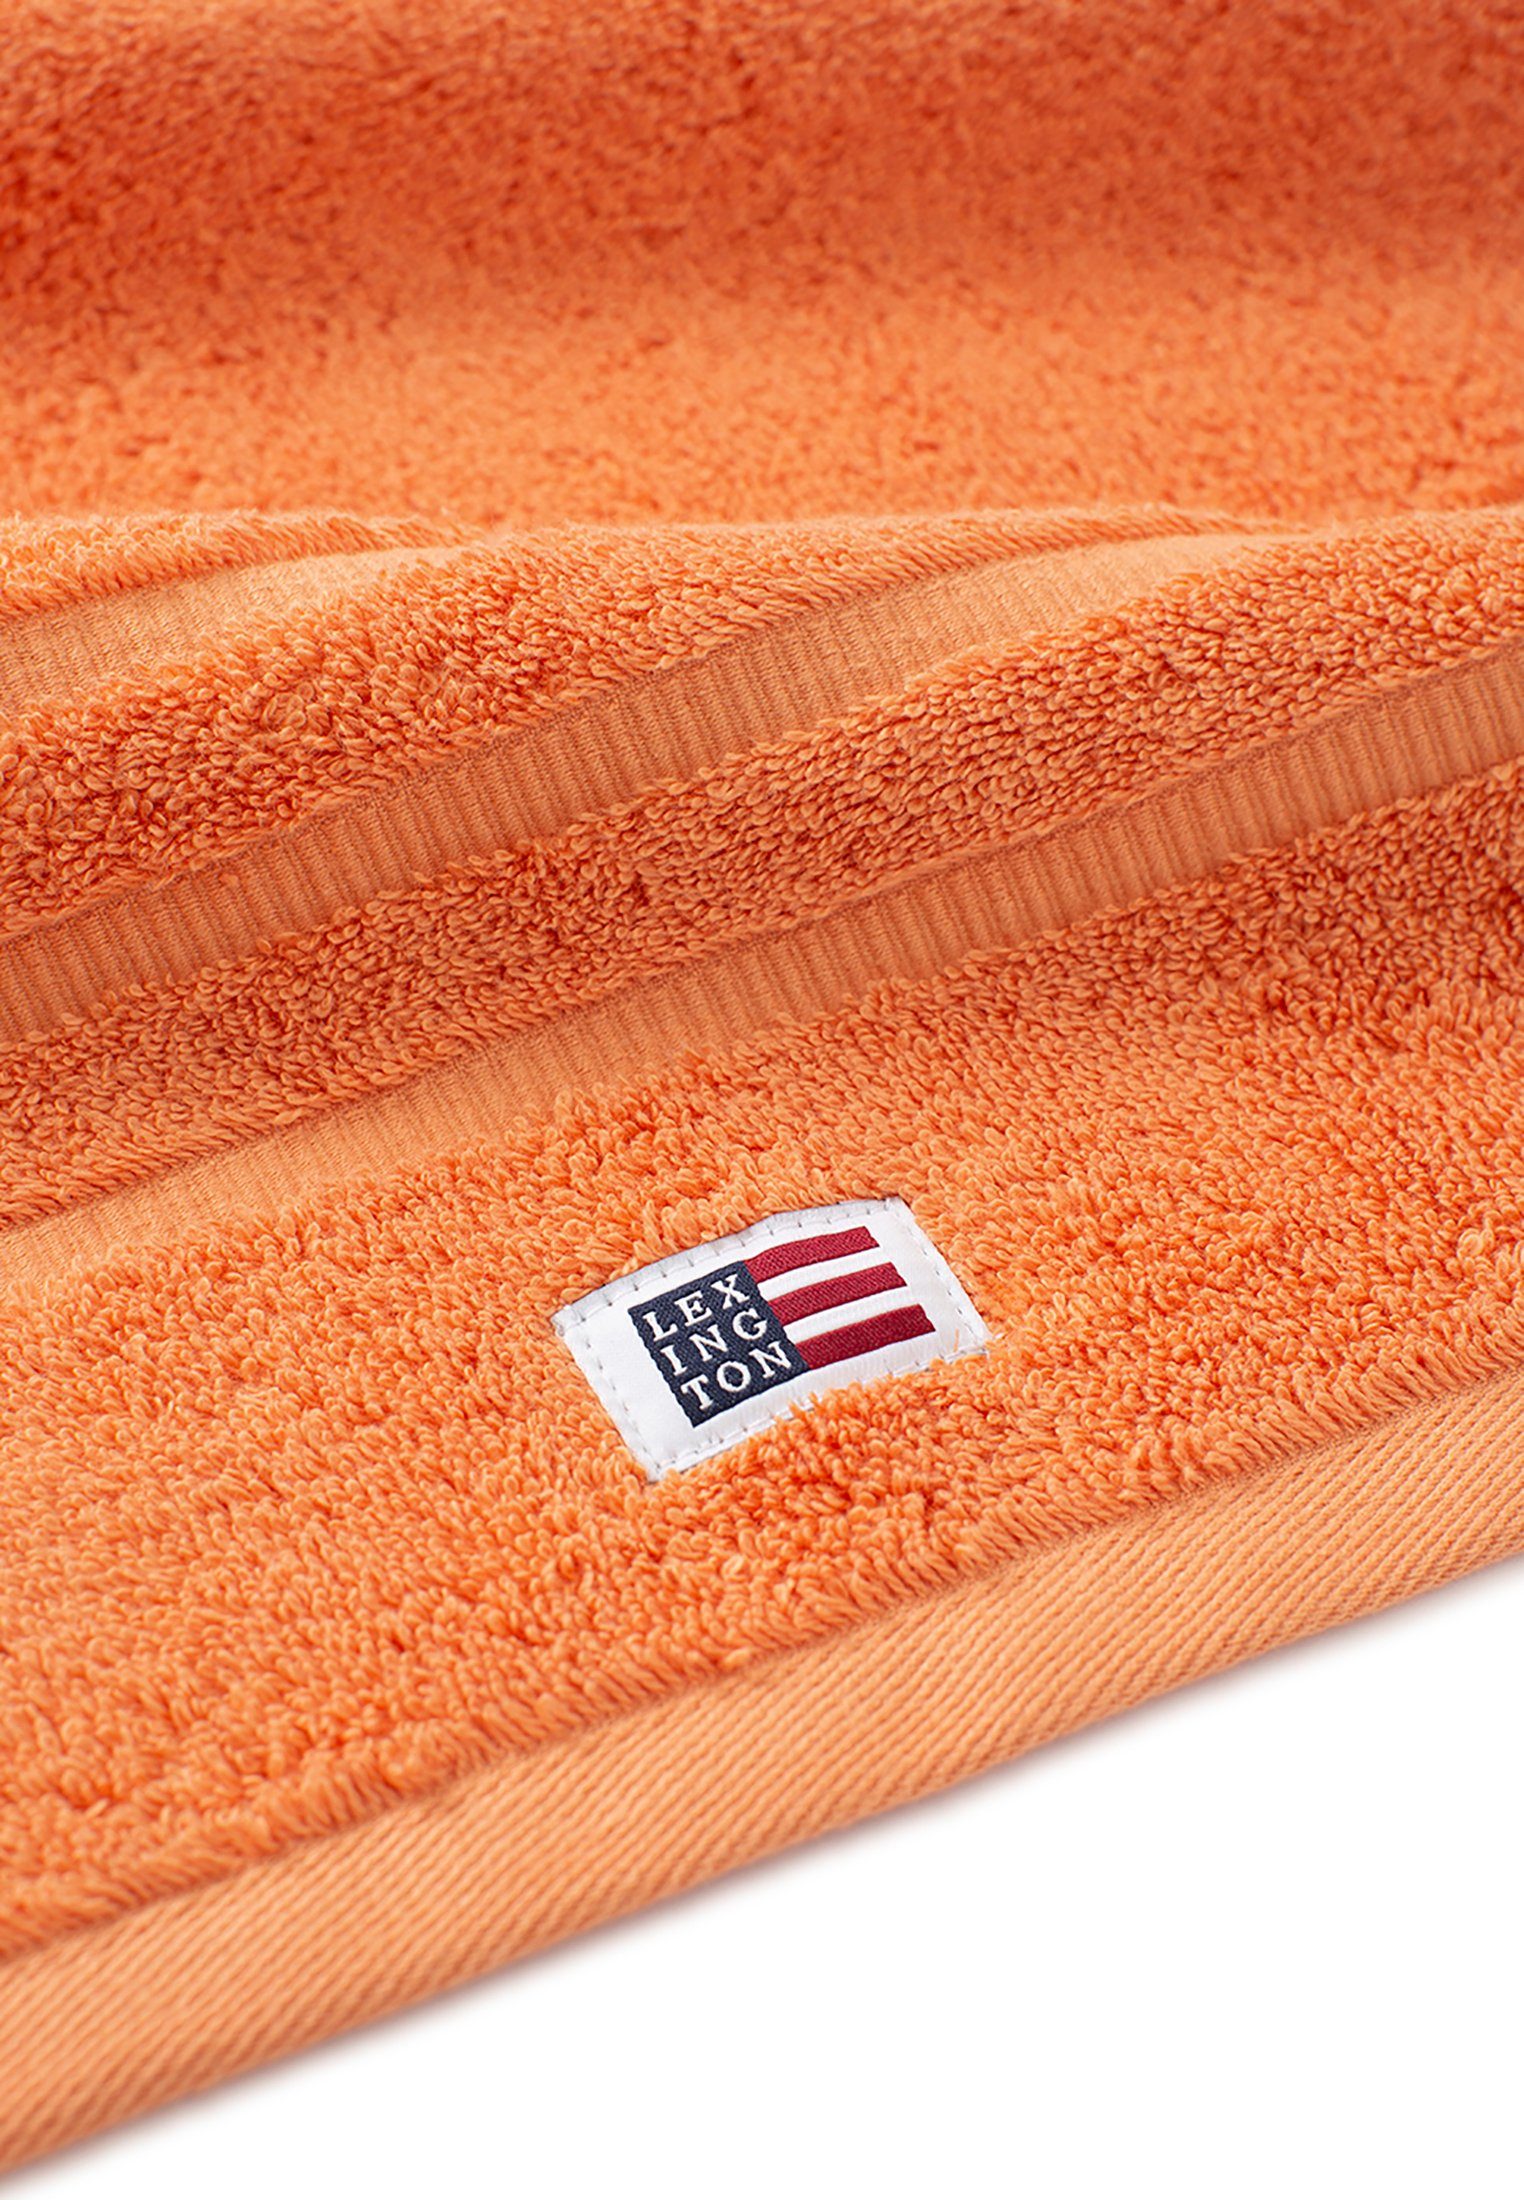 Lexington melon peach Handtuch Towel Original